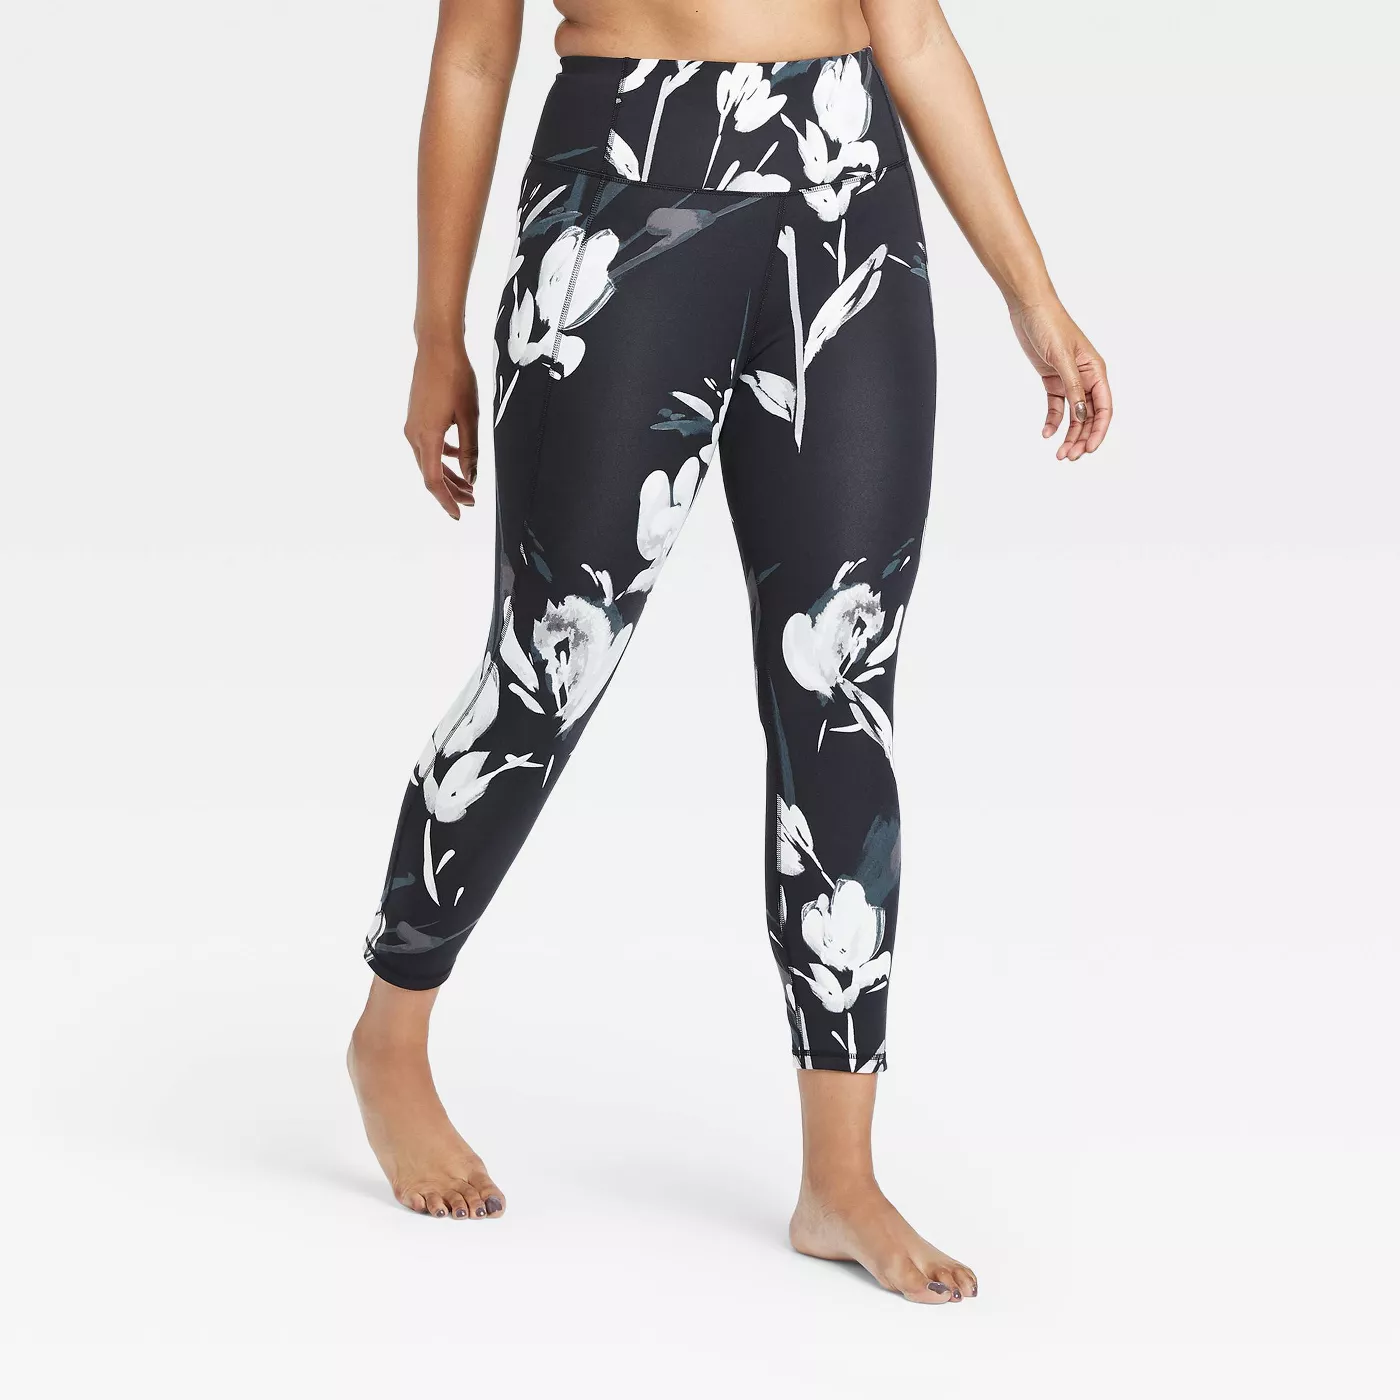 target women's yoga clothes